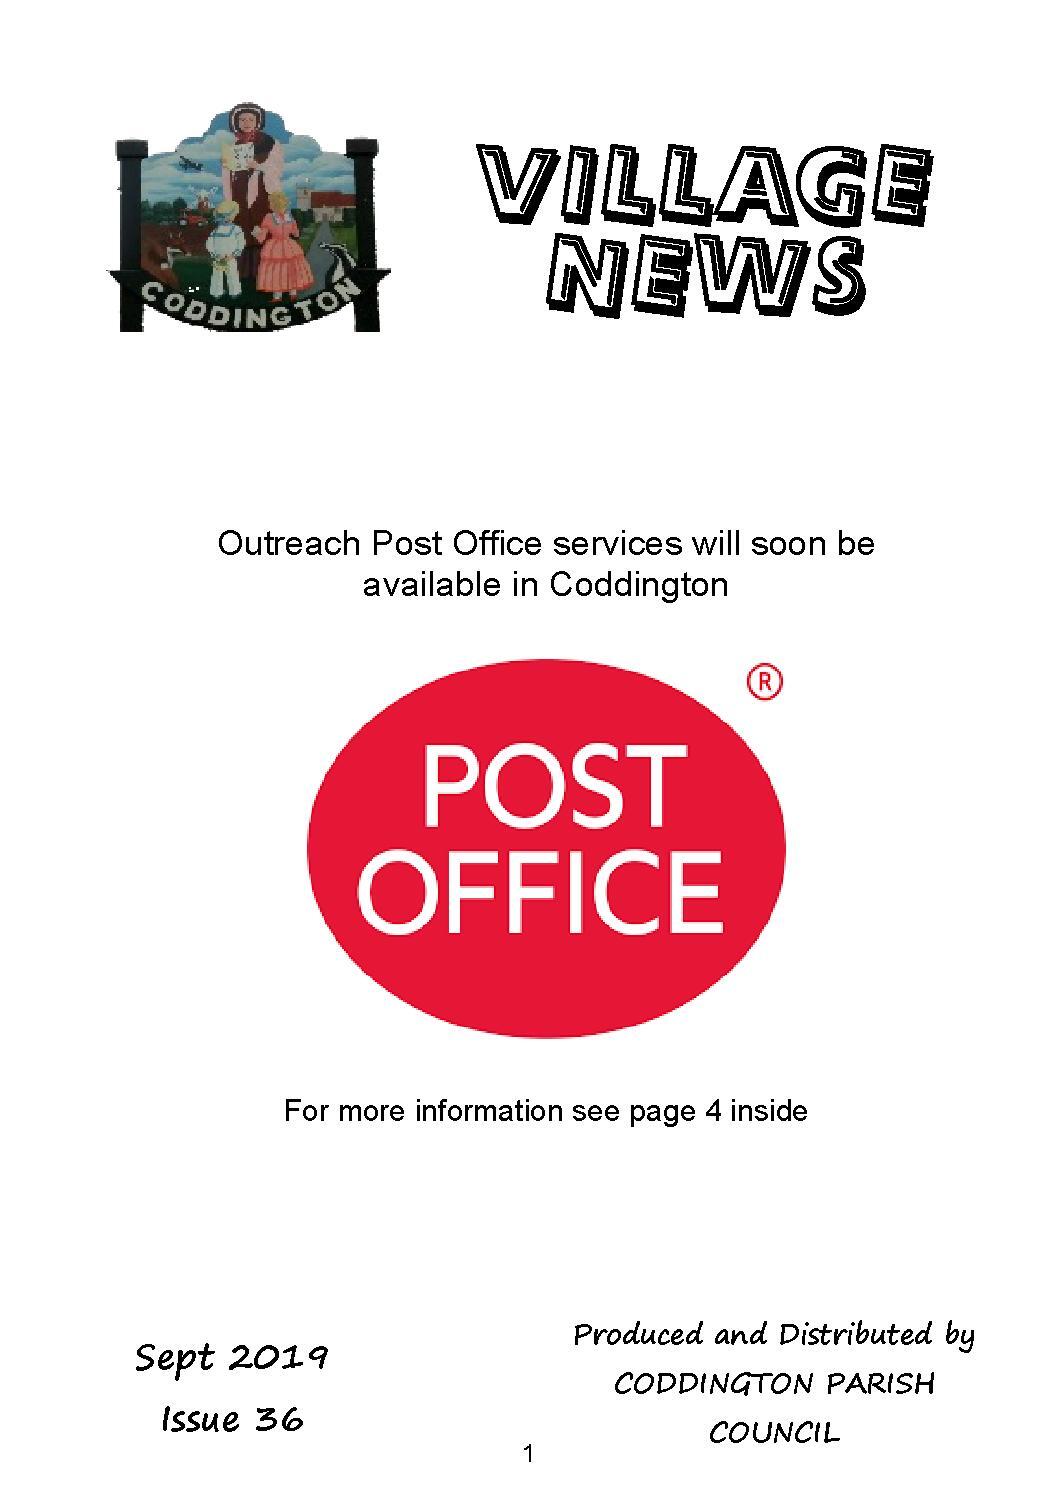 Coddington Village News - September 2019